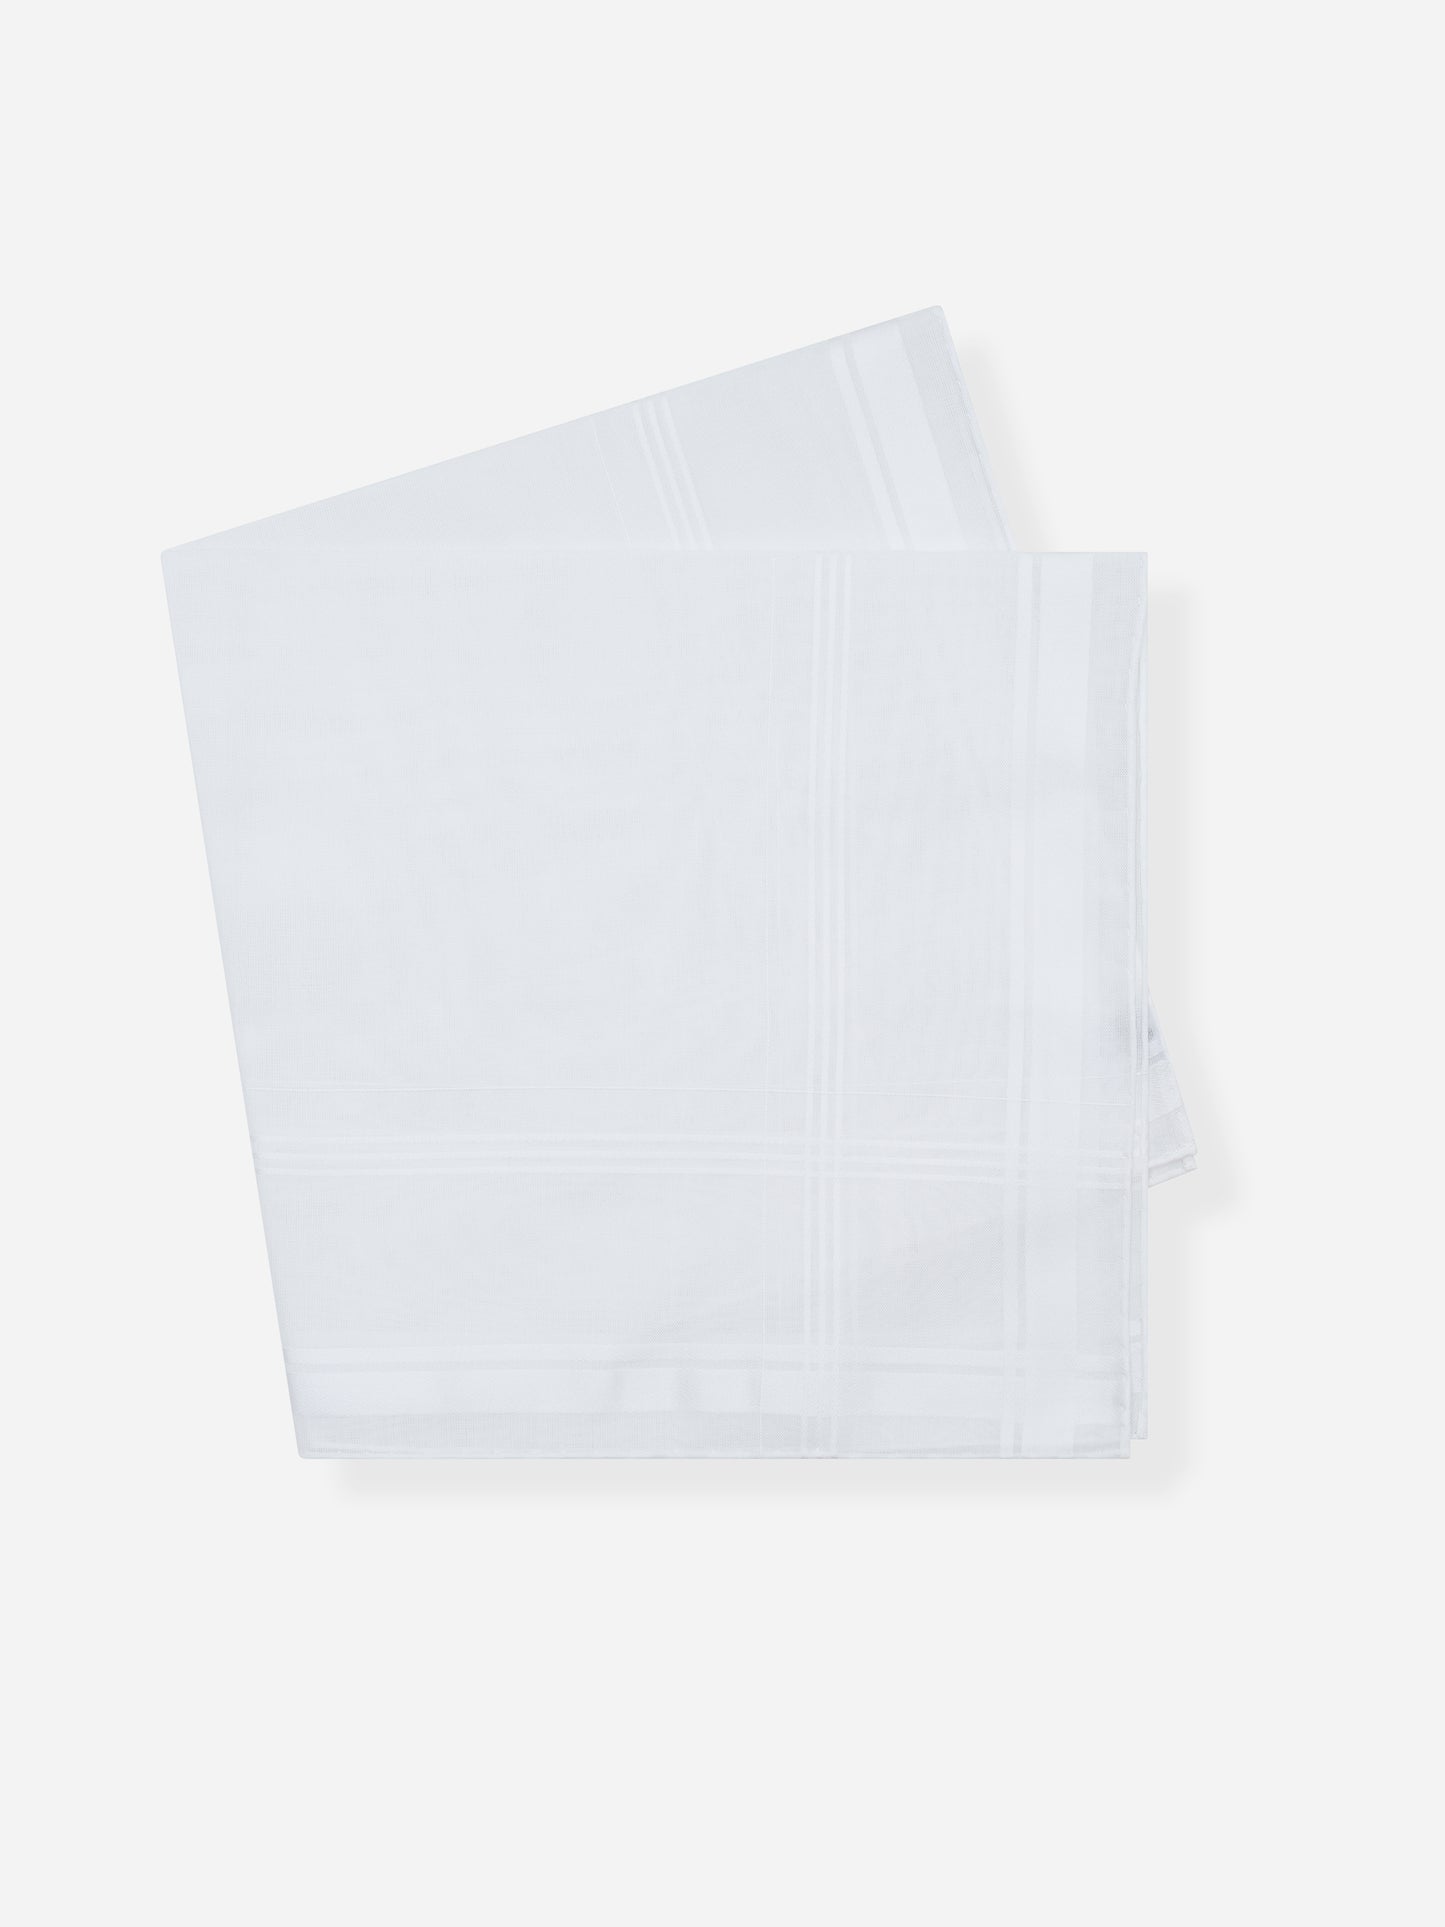 Sarabande Blanc Handkerchief - Oscar Hunt